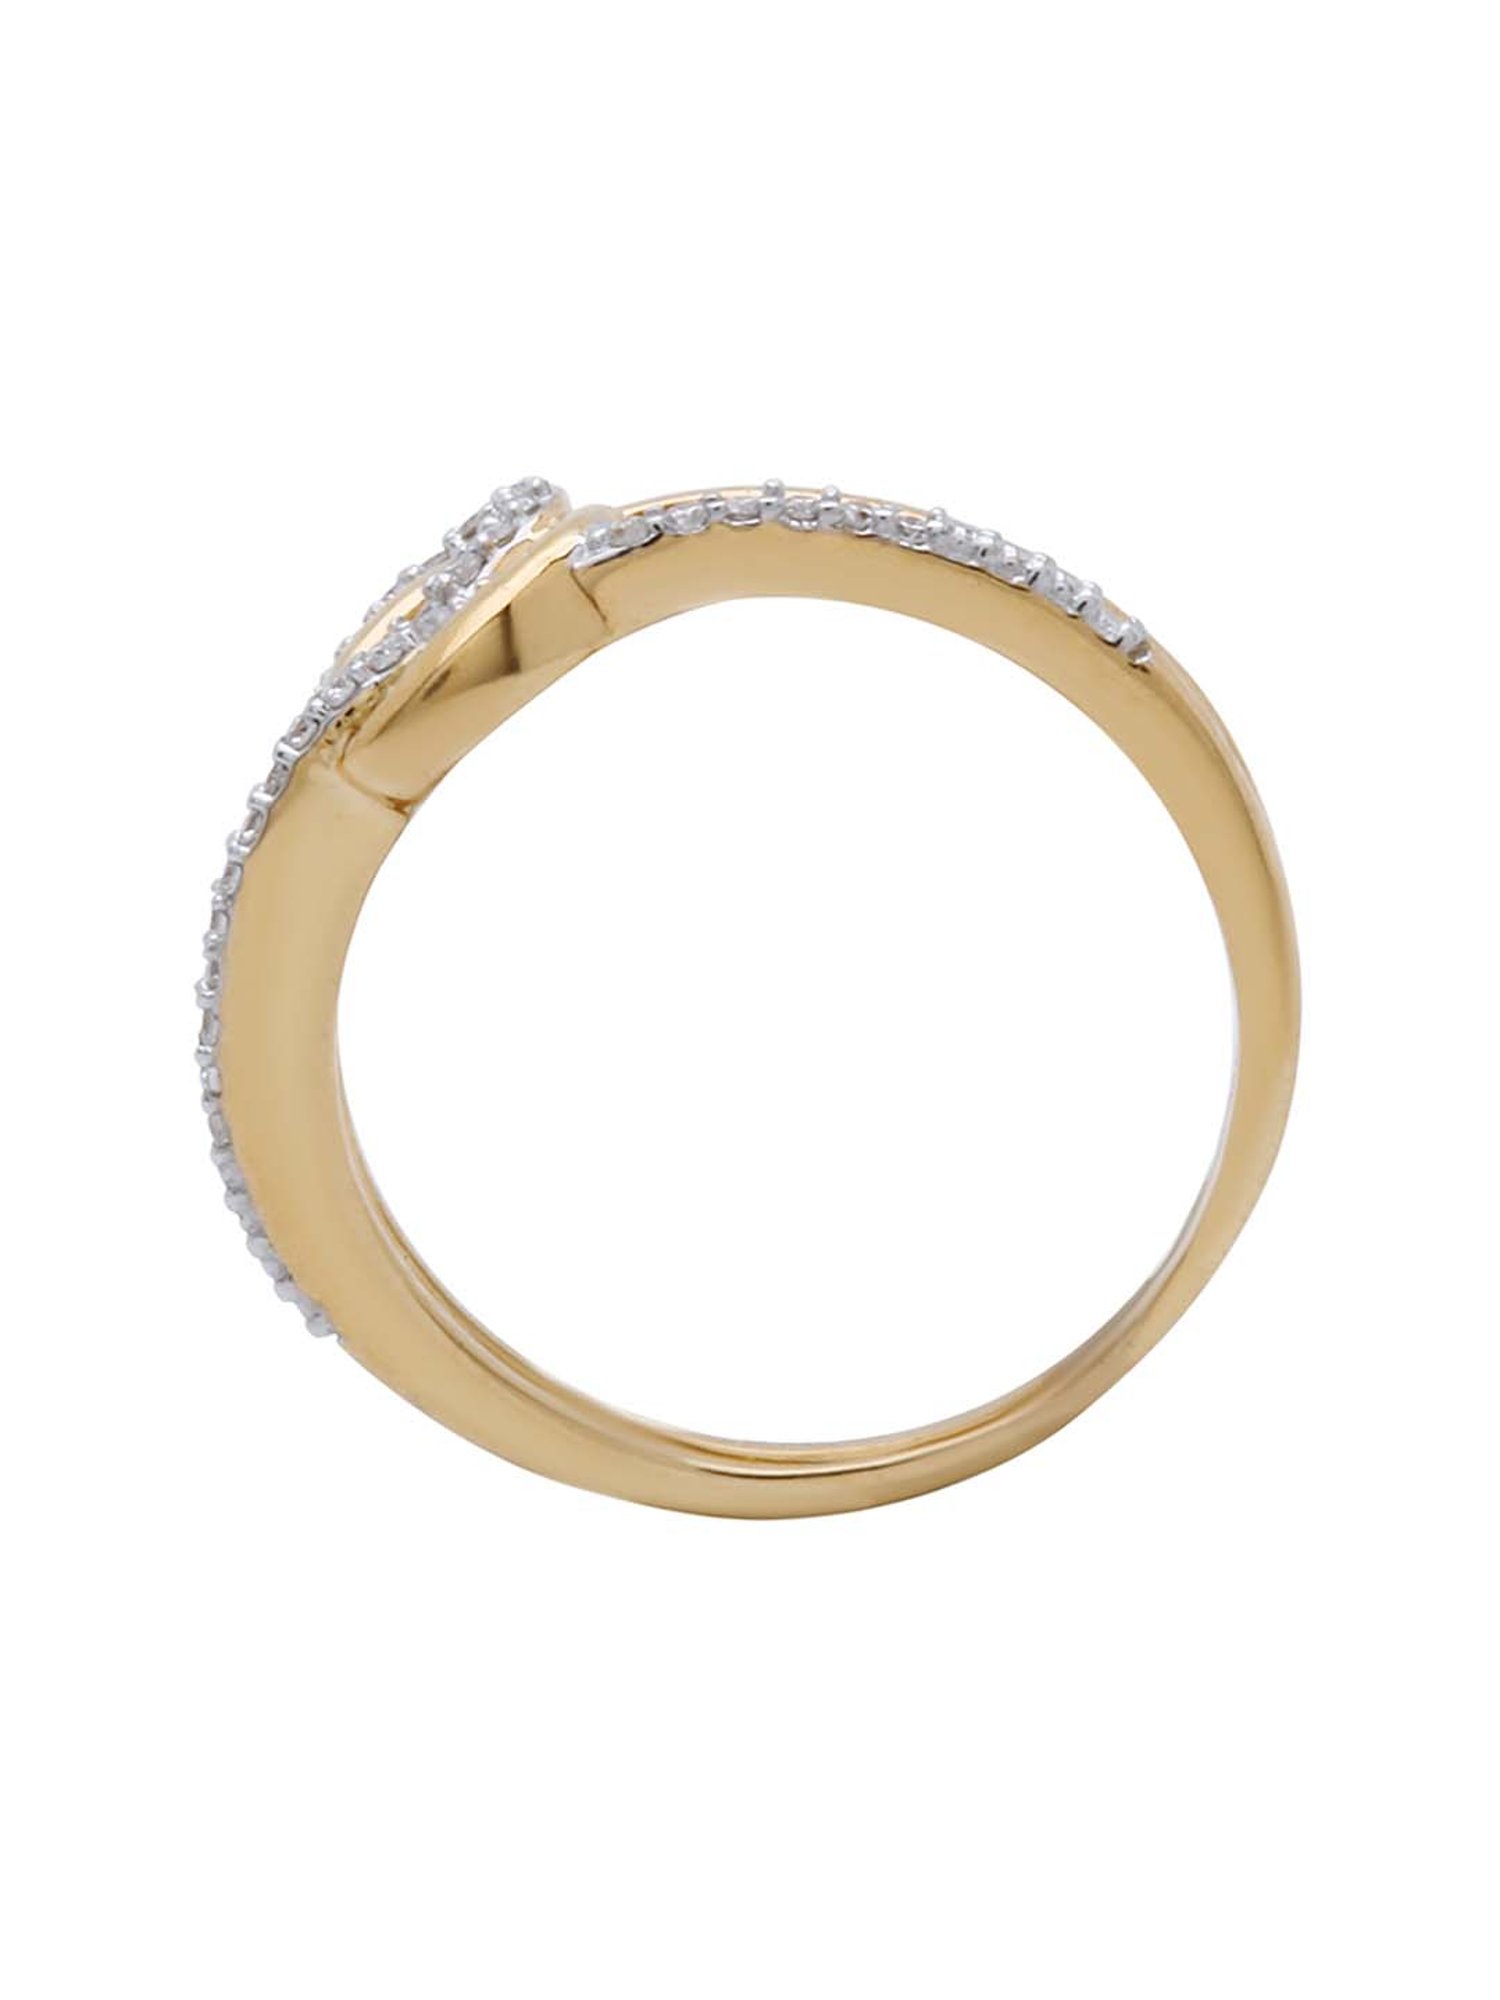 Sparkling diamond rings from Waman Hari pethe sons***❤️llDiamond rings for  engagementll ❤️ - YouTube